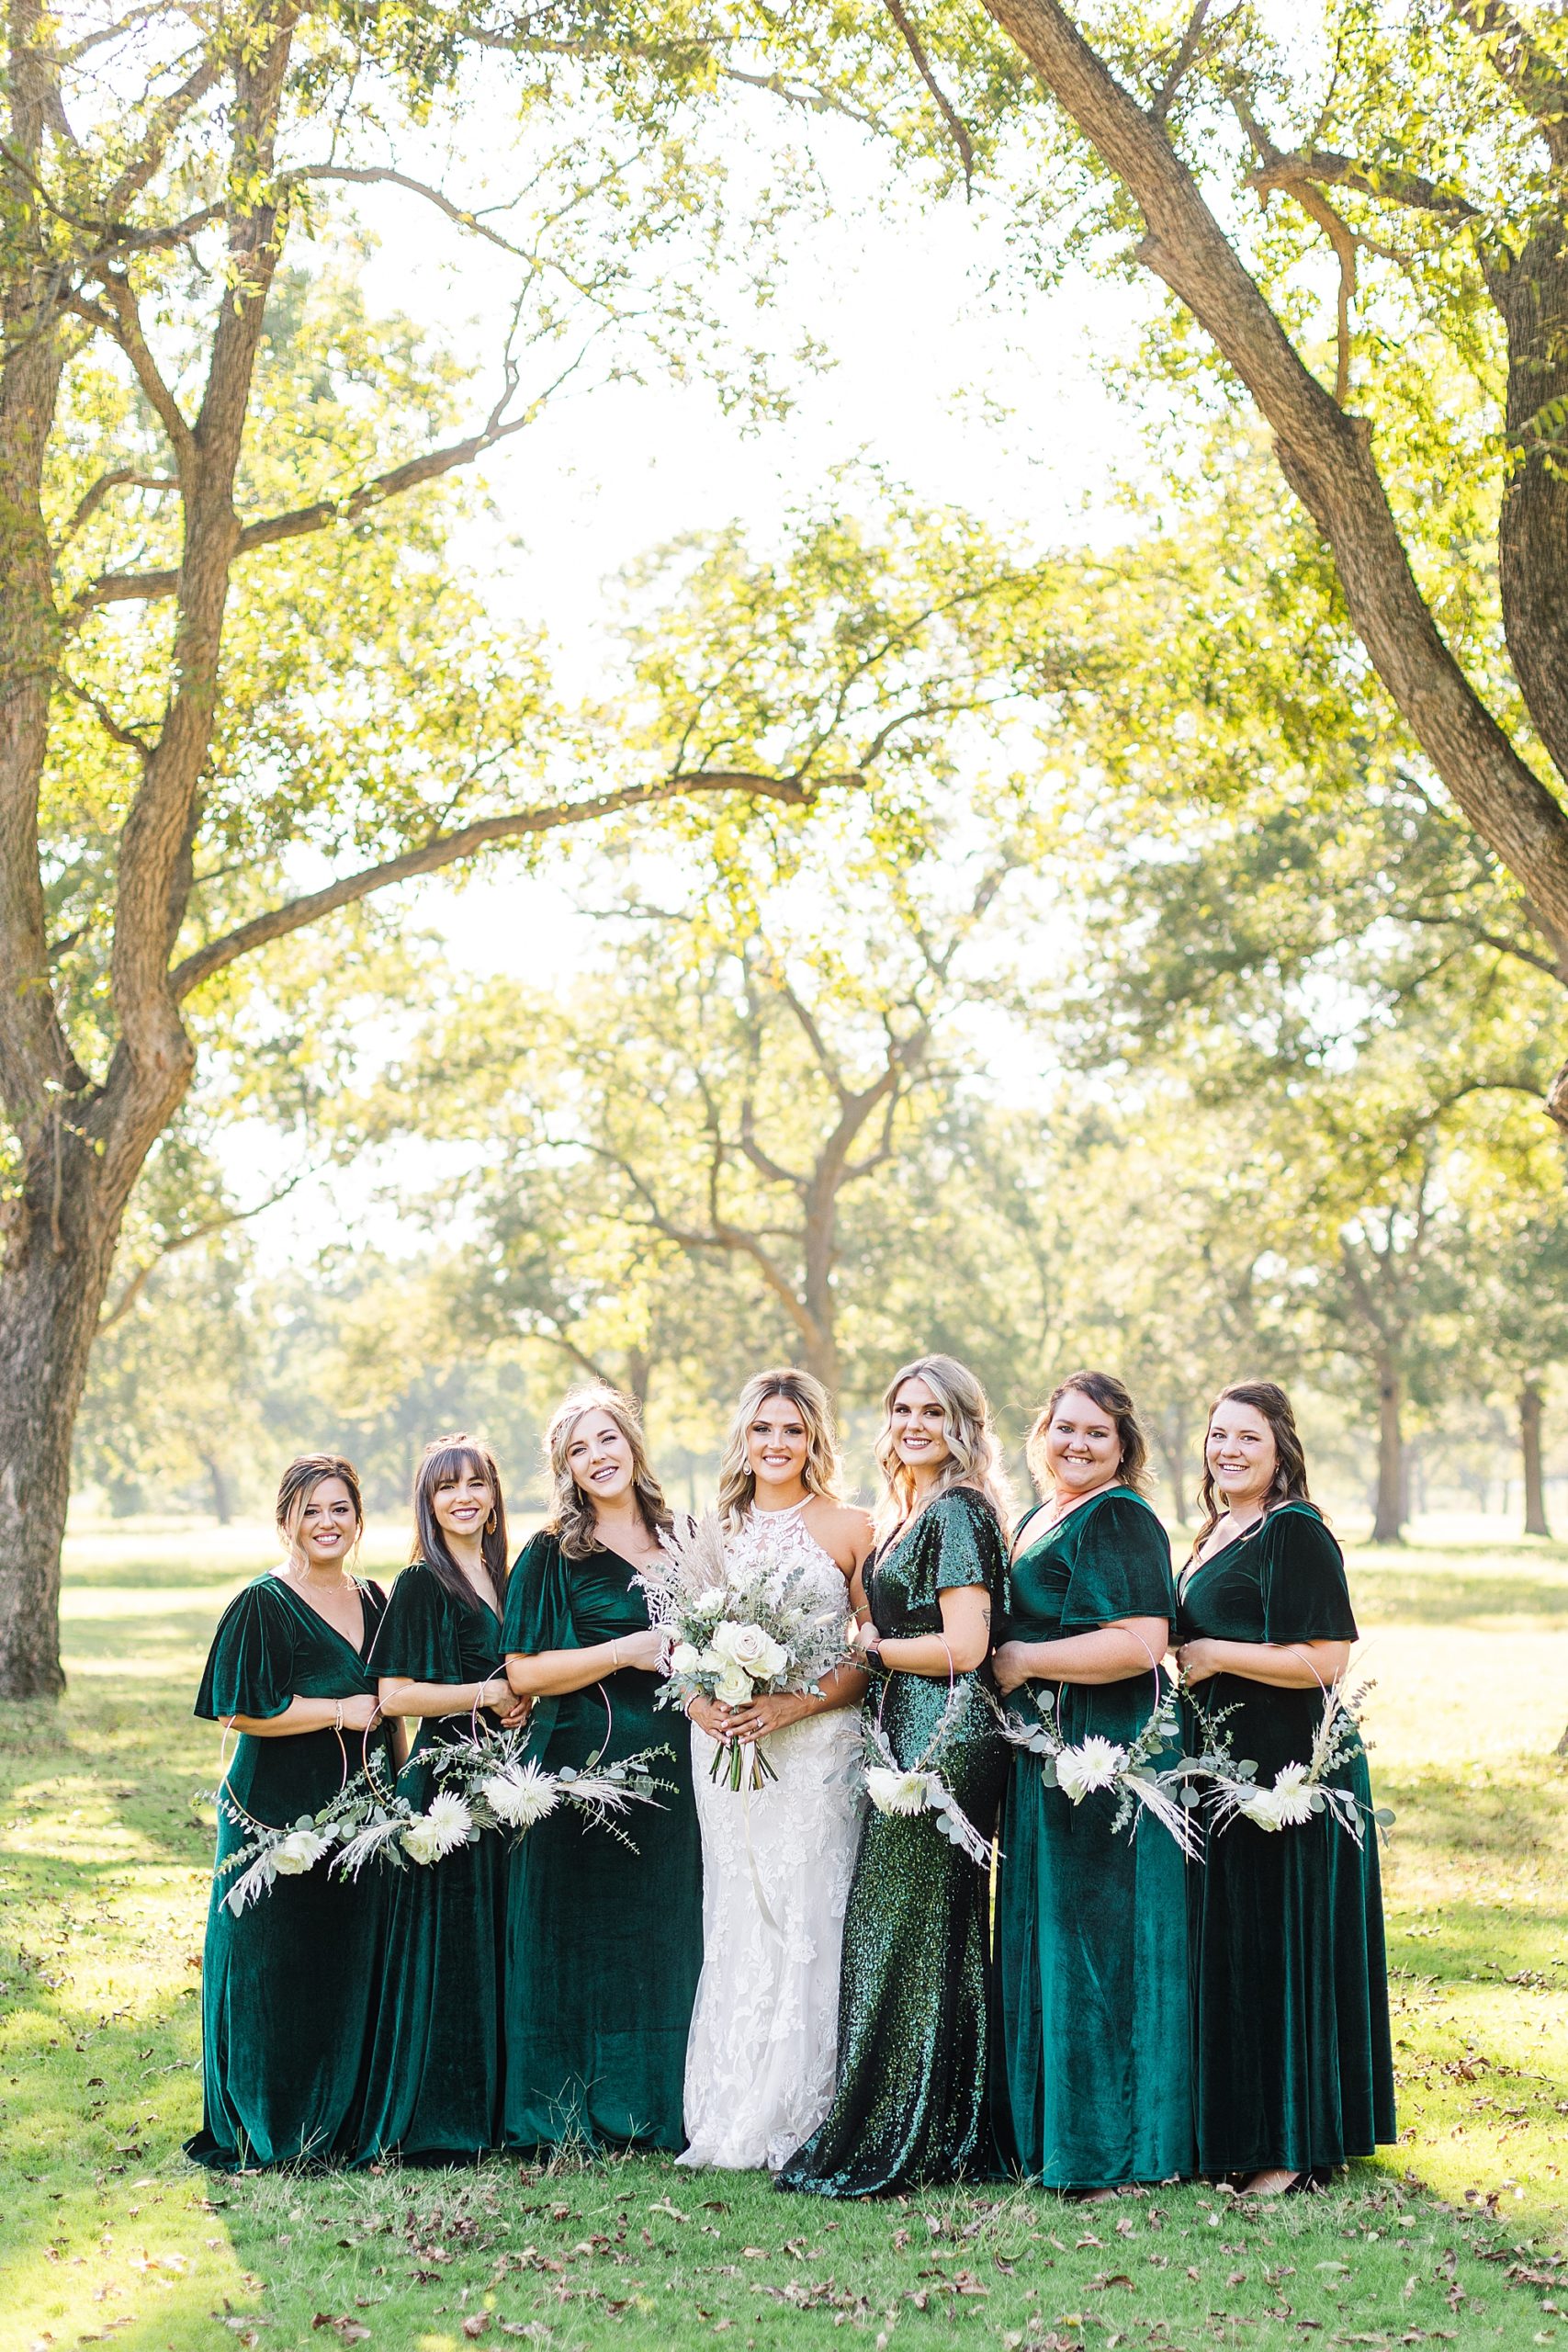 Emerald green wedding dresses at Pecandarosa Ranch wedding in the pecan grove. 